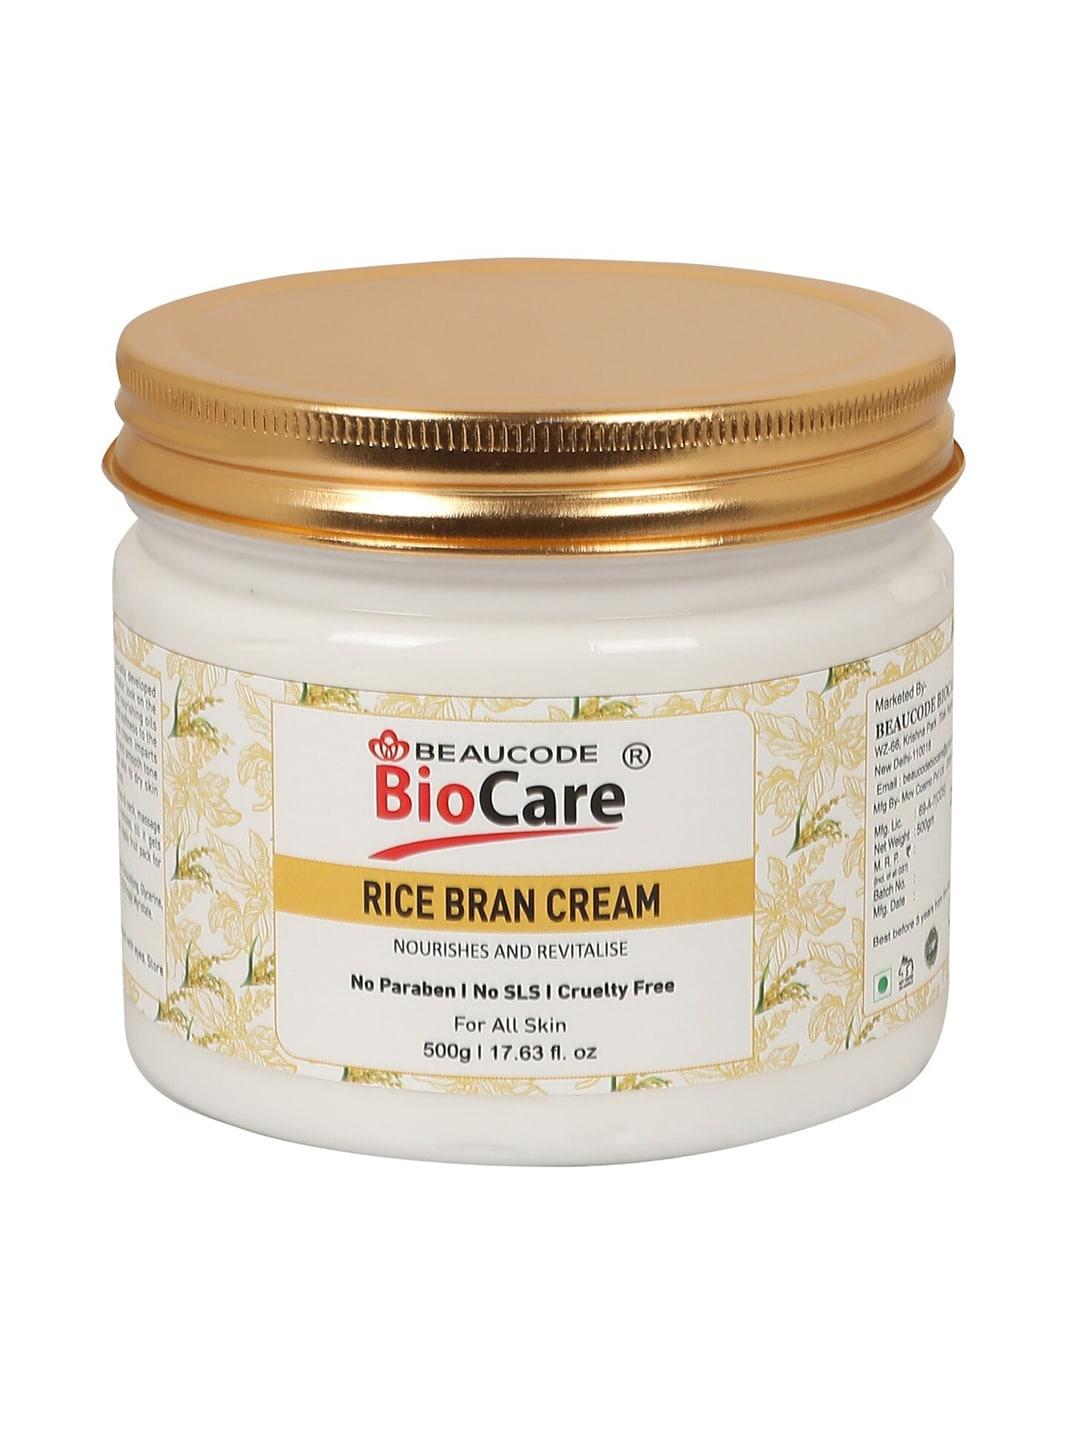 BEAUCODE BIOCARE Rice Bran Face & Body Cream for Nourish & Revitalize - 500 g